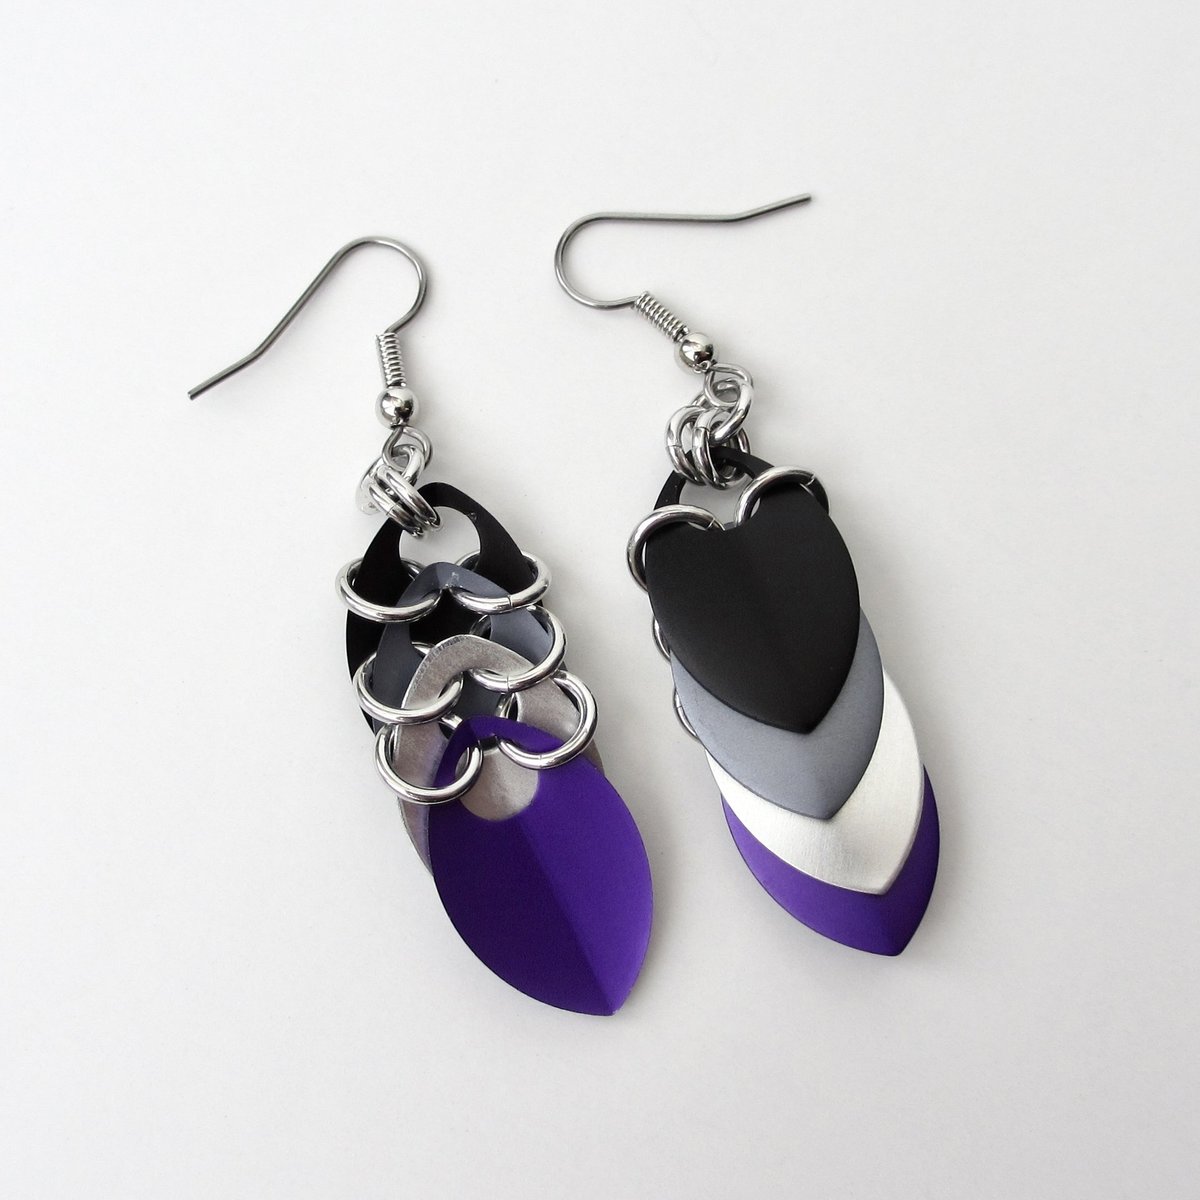 Ace pride earrings, chainmail scales earrings, asexual pride jewelry; black gray white purple